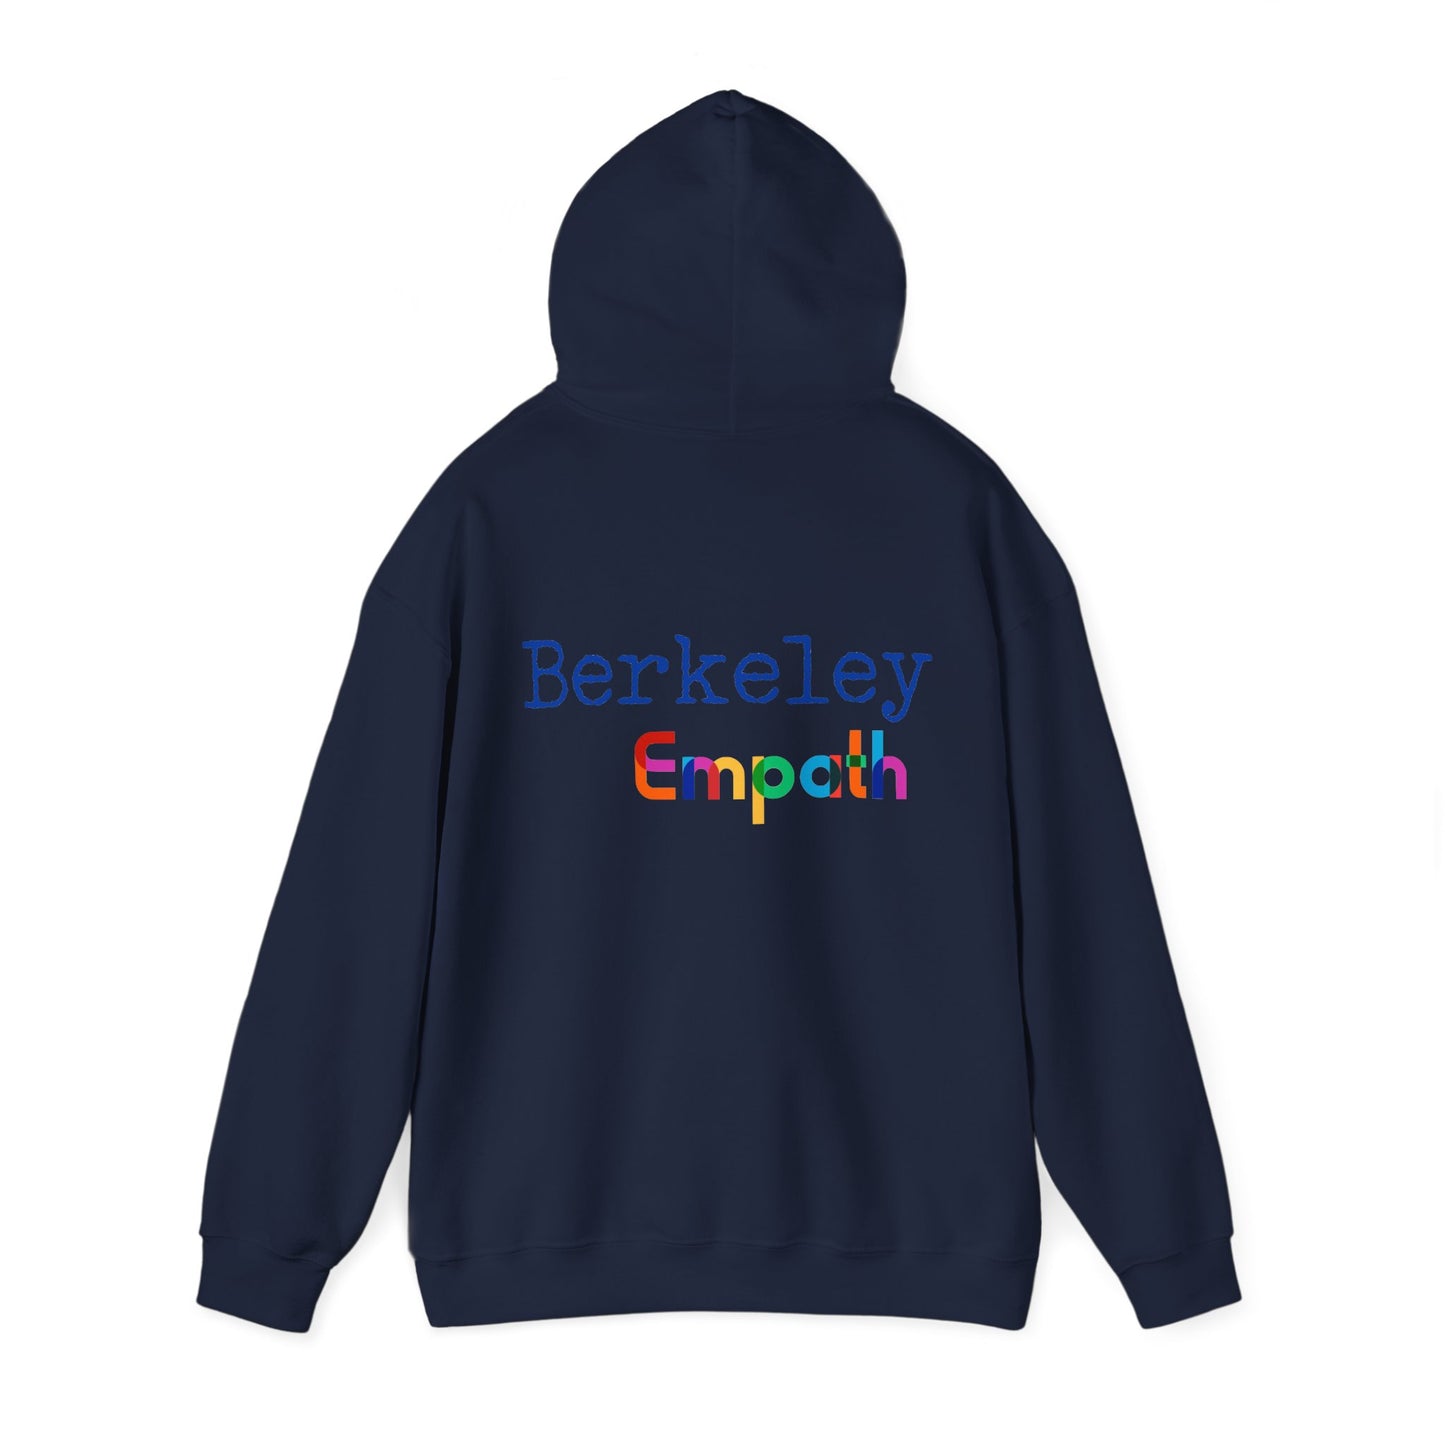 Berkeley Empath Unisex Heavy Blend Hooded Sweatshirt